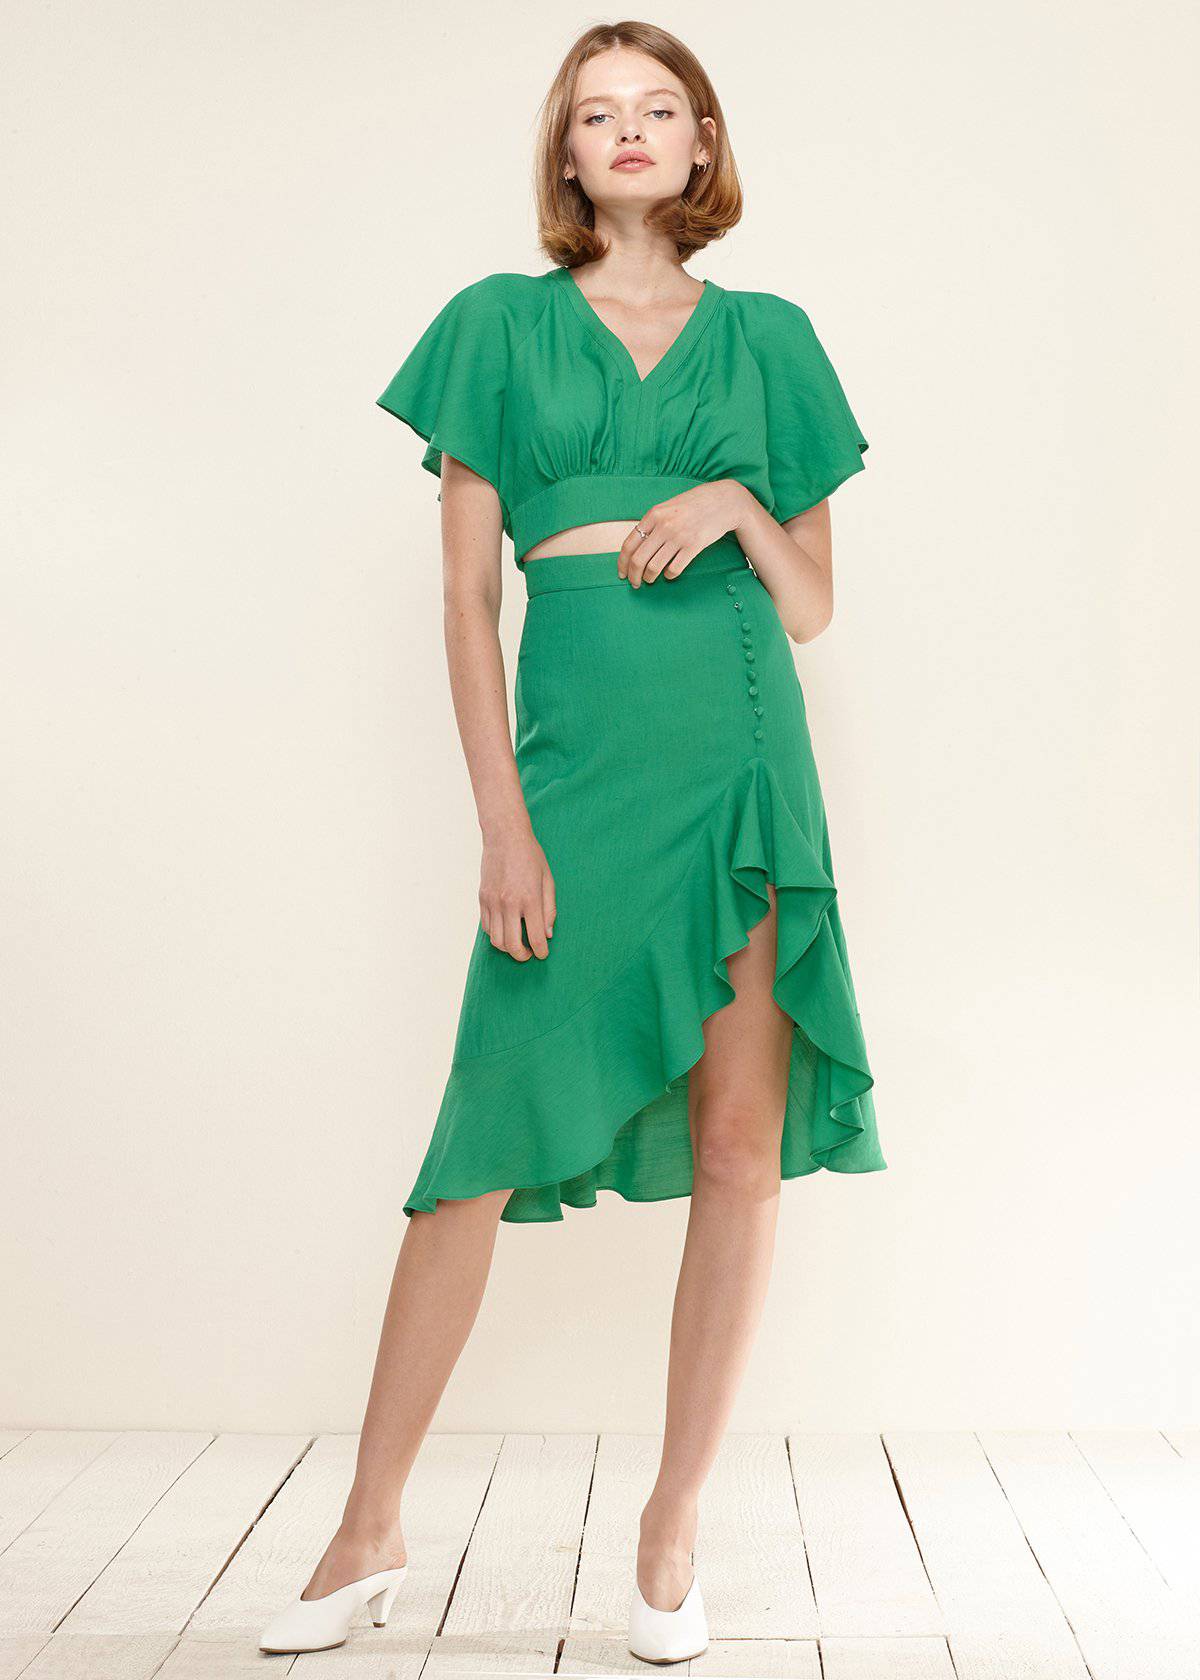 Women's Asymmetrical Hem Button Front Skirt in Kelly Green by Shop at Konus